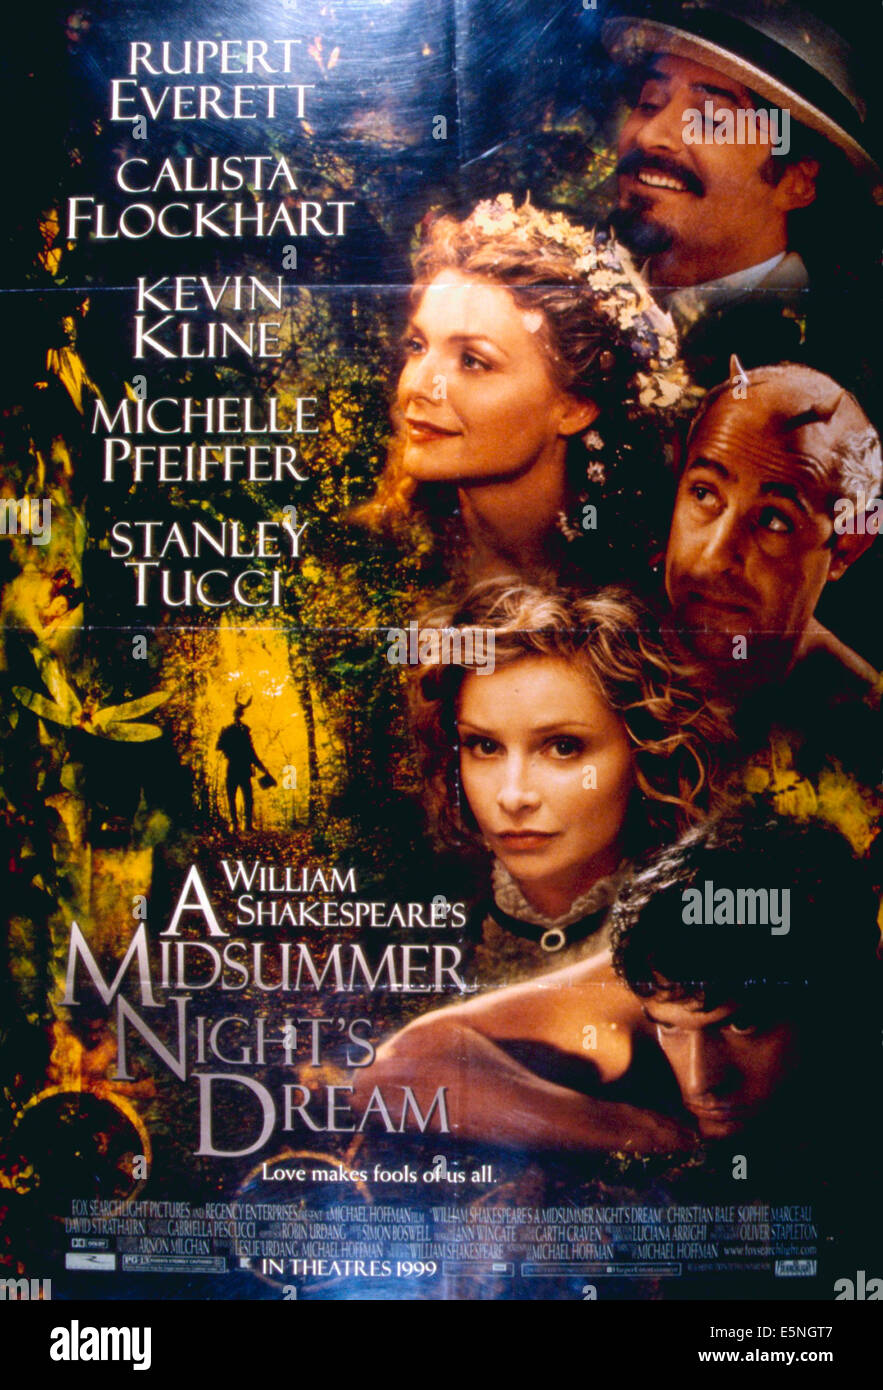 A MIDSUMMER NIGHT'S DREAM, Michelle Pfeiffer, Kevin Kline, Stanley Tucci, Calista Flockhart, Rupert Everett, 1999. TM and Stock Photo